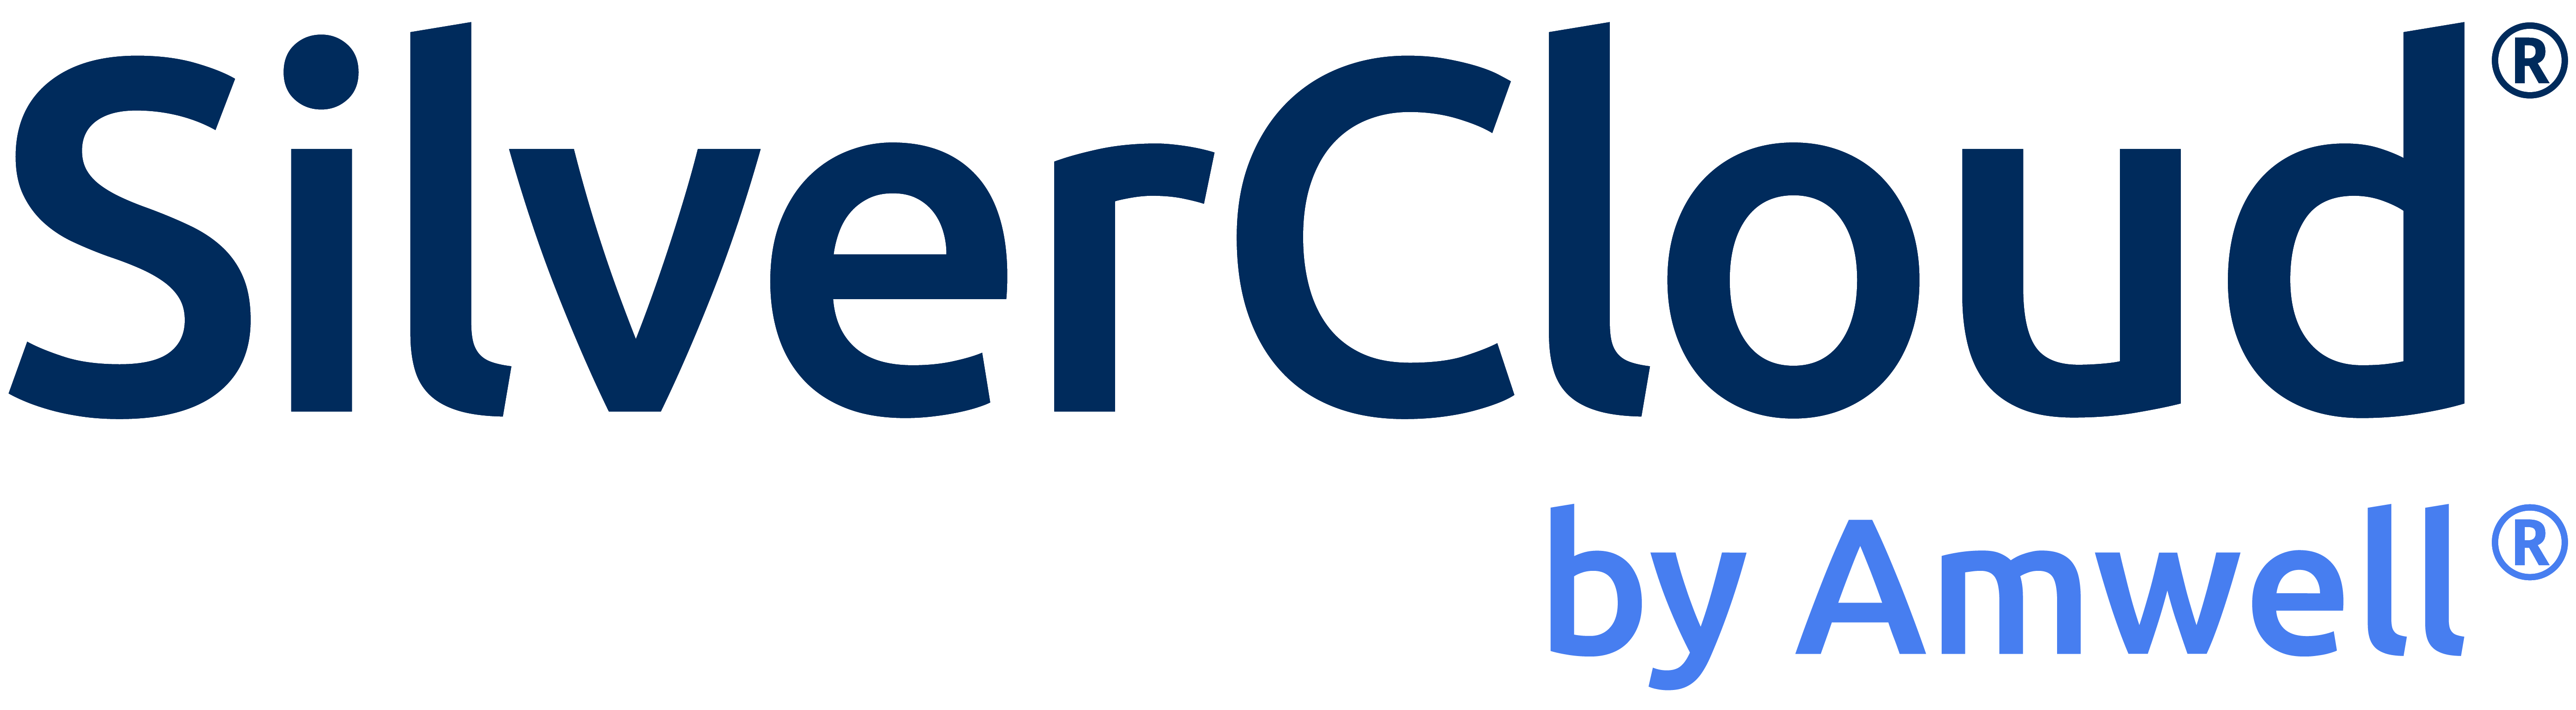 Silvercloud logo